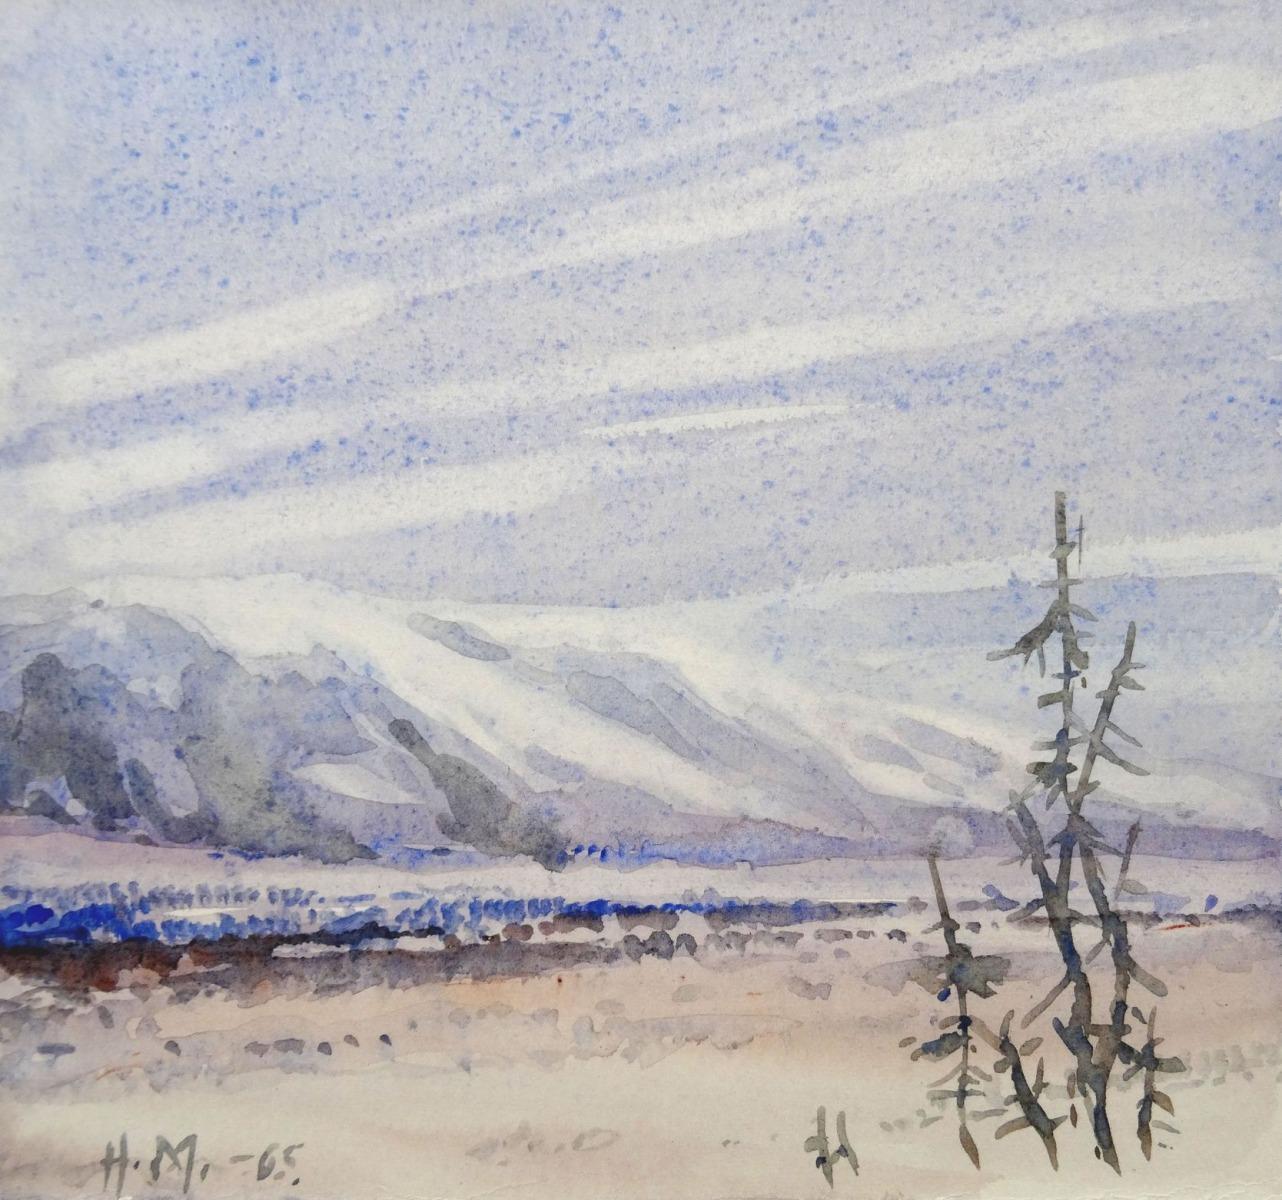 Landscape with mountains  1965, paper/watercolor, 17.5x18.5 cm